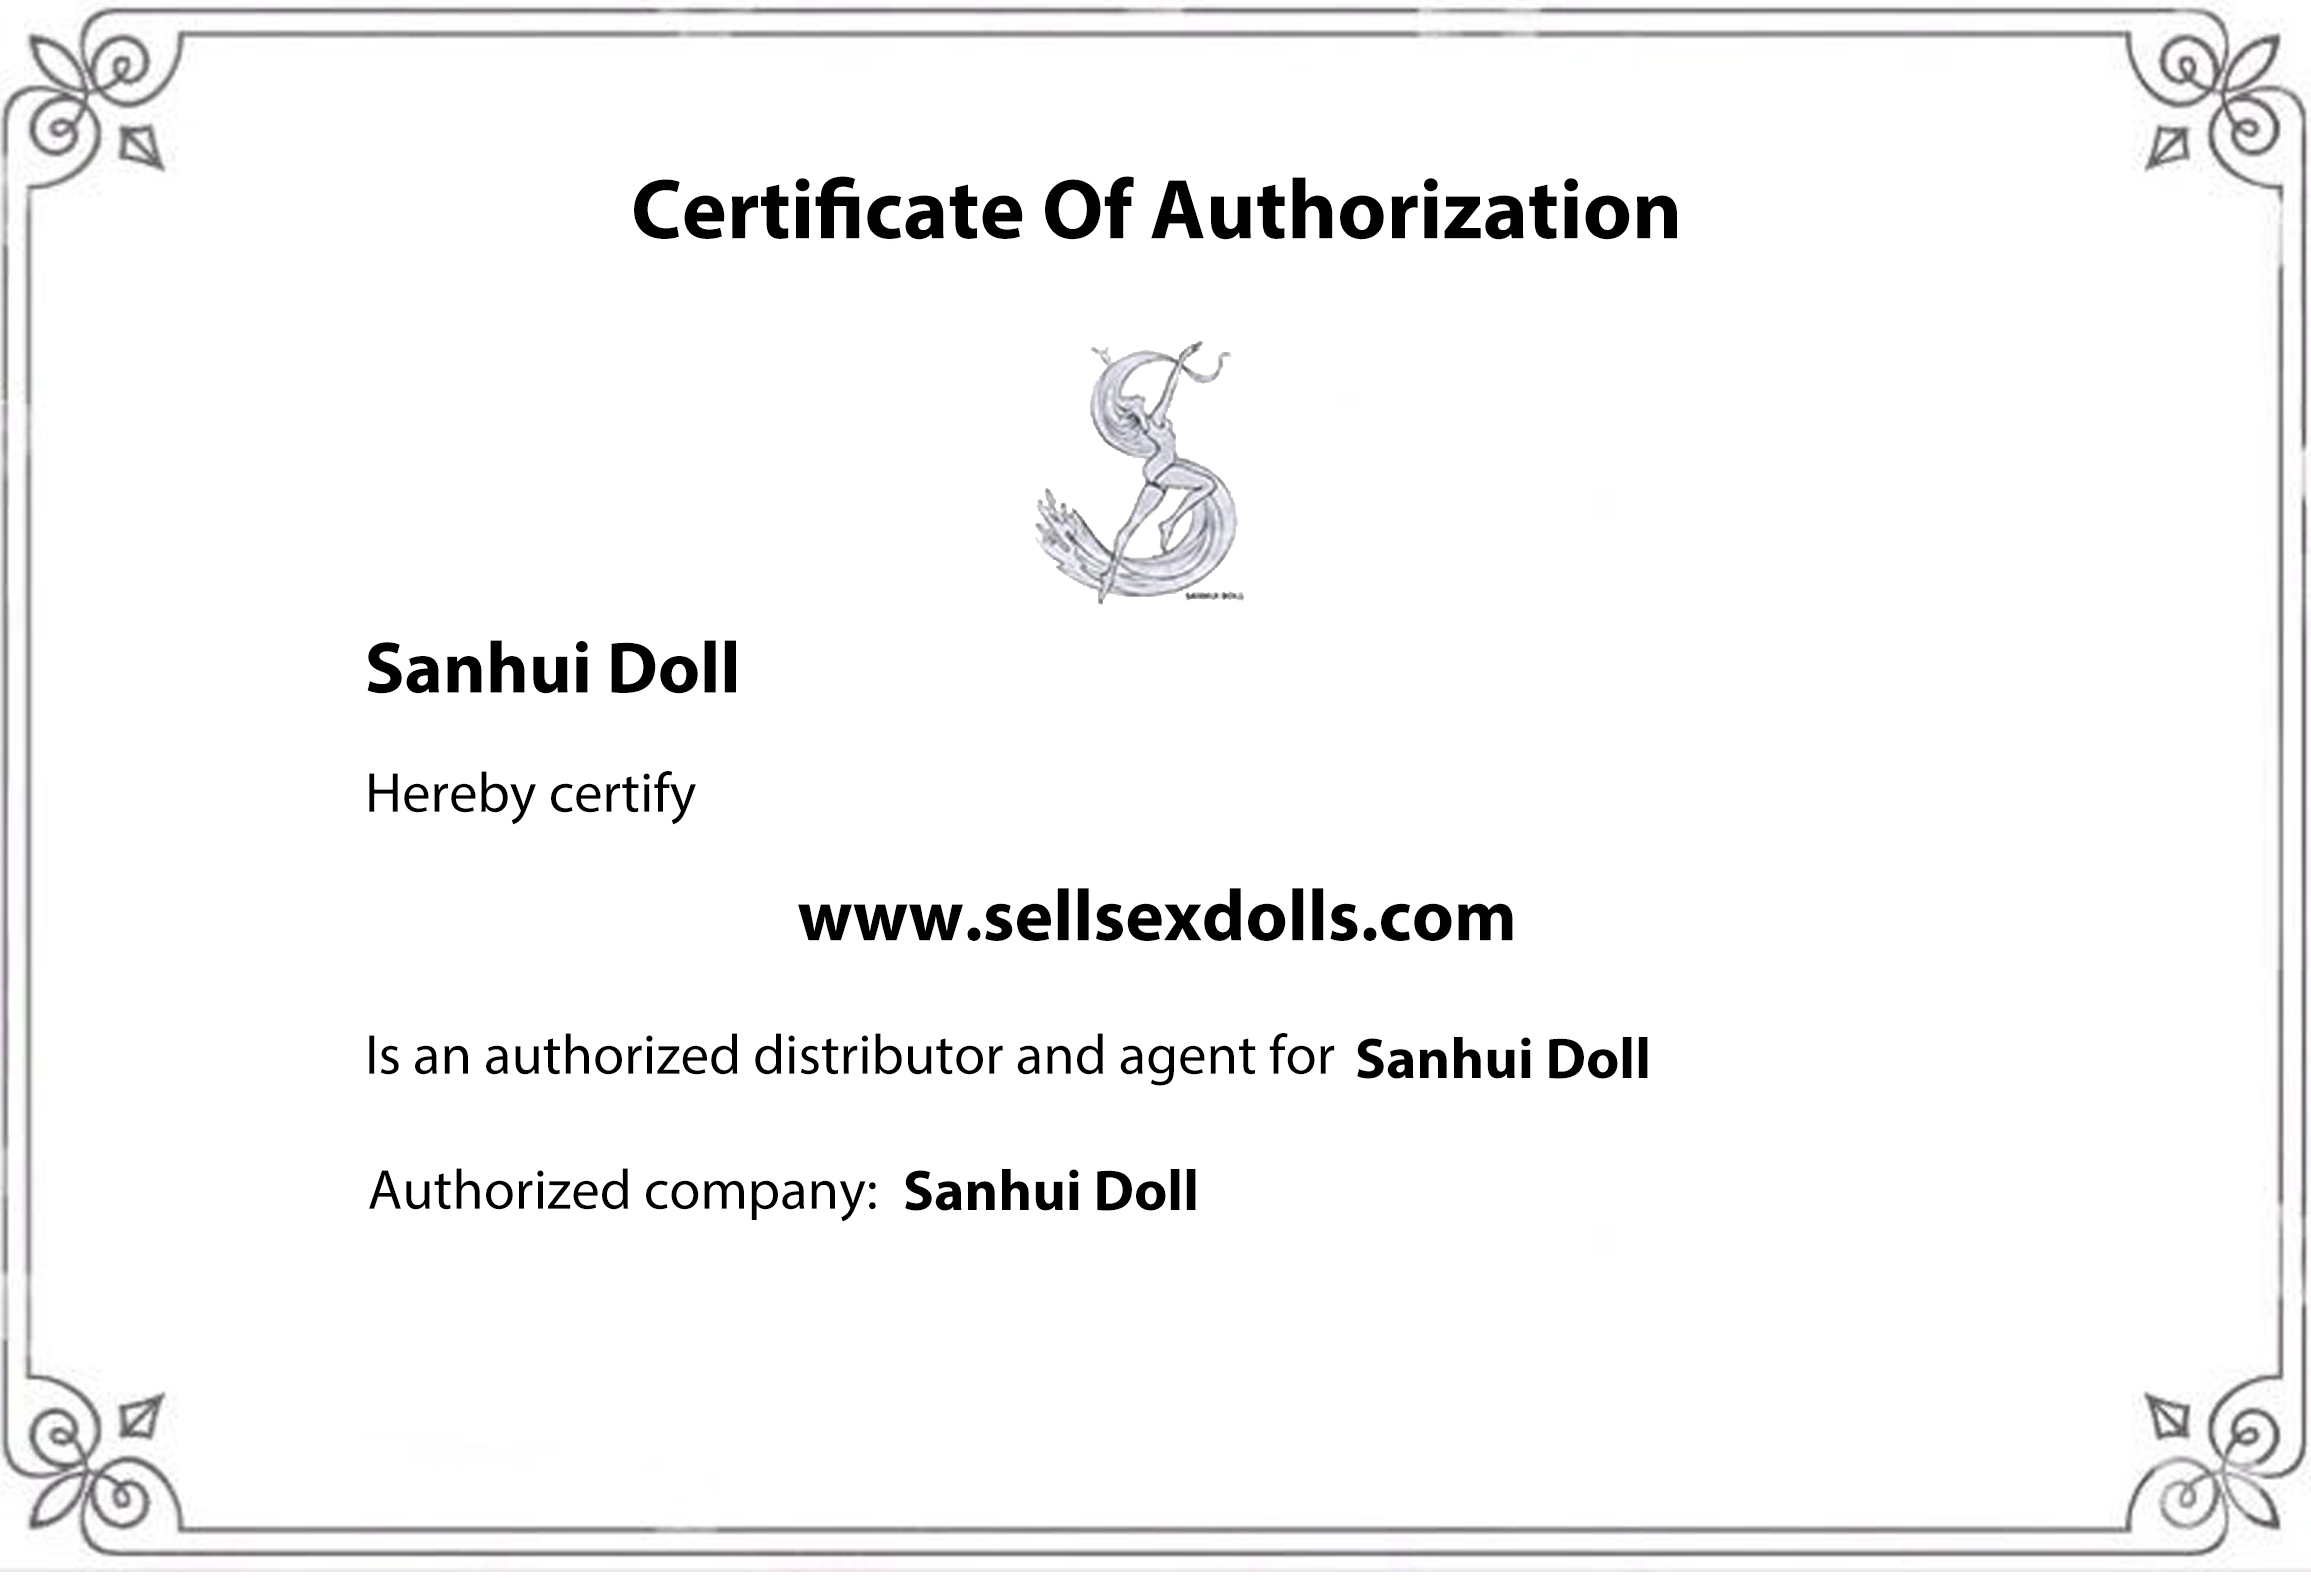 sanhui doll certificate